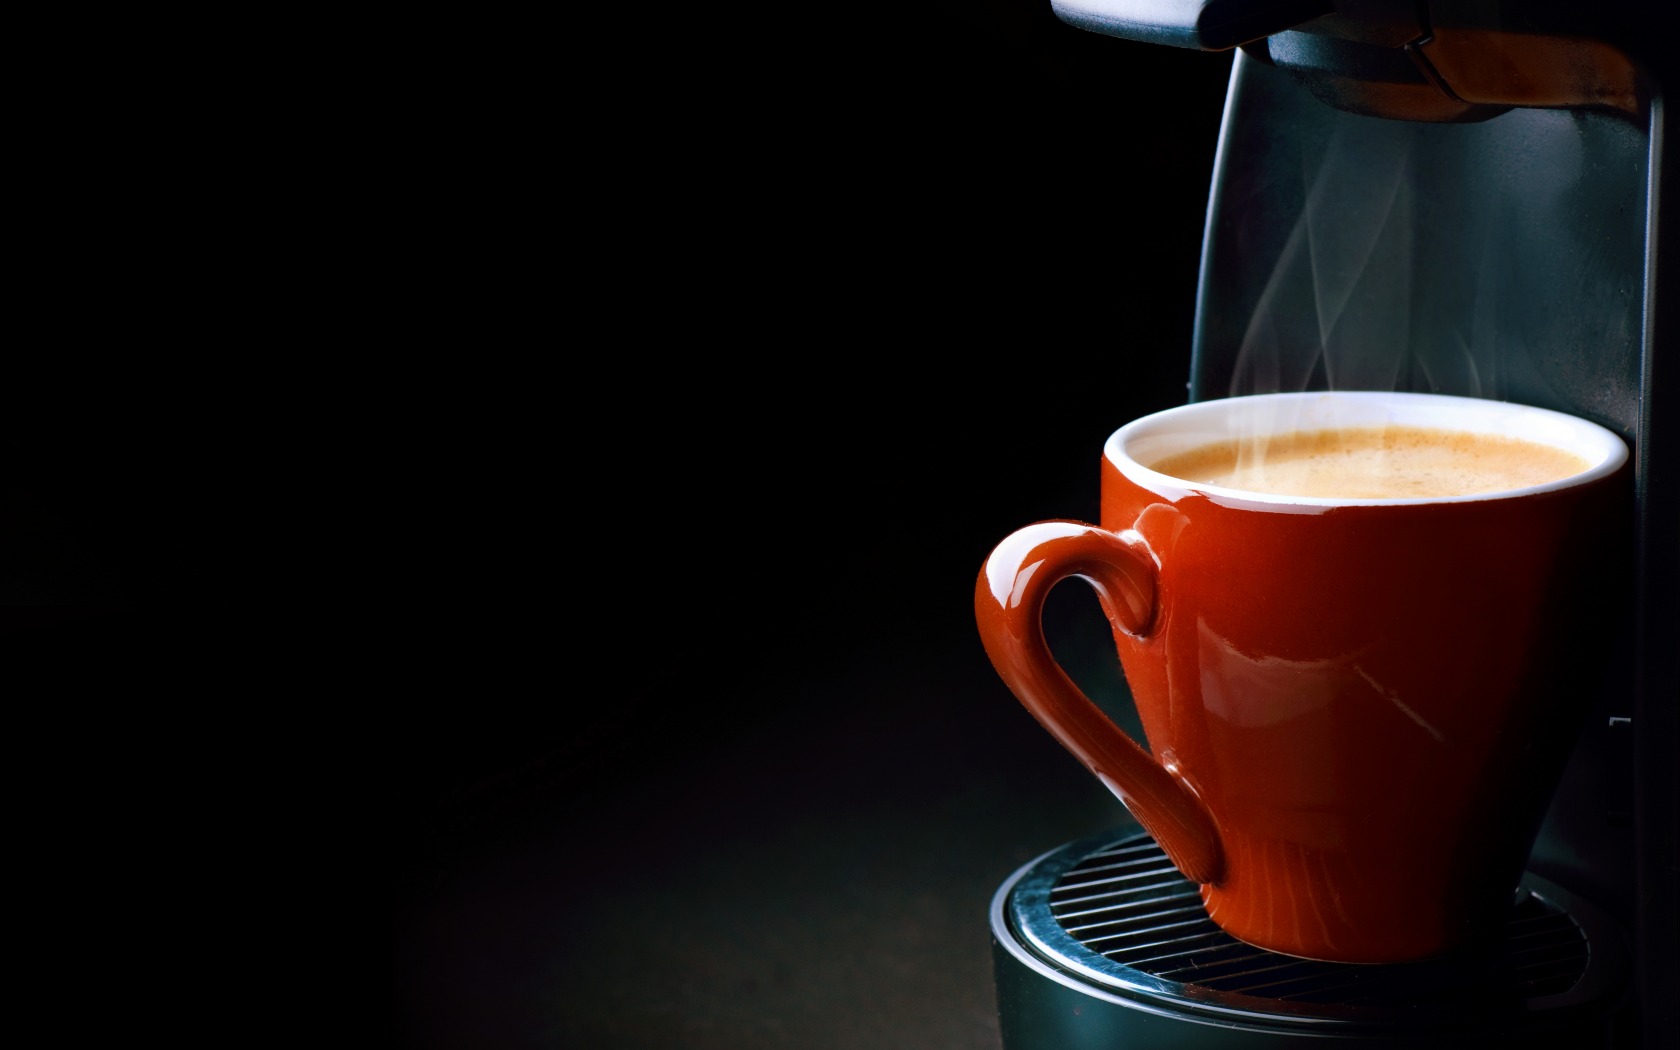 papel espresso,taza,taza,taza de café,café exprés,cafeína